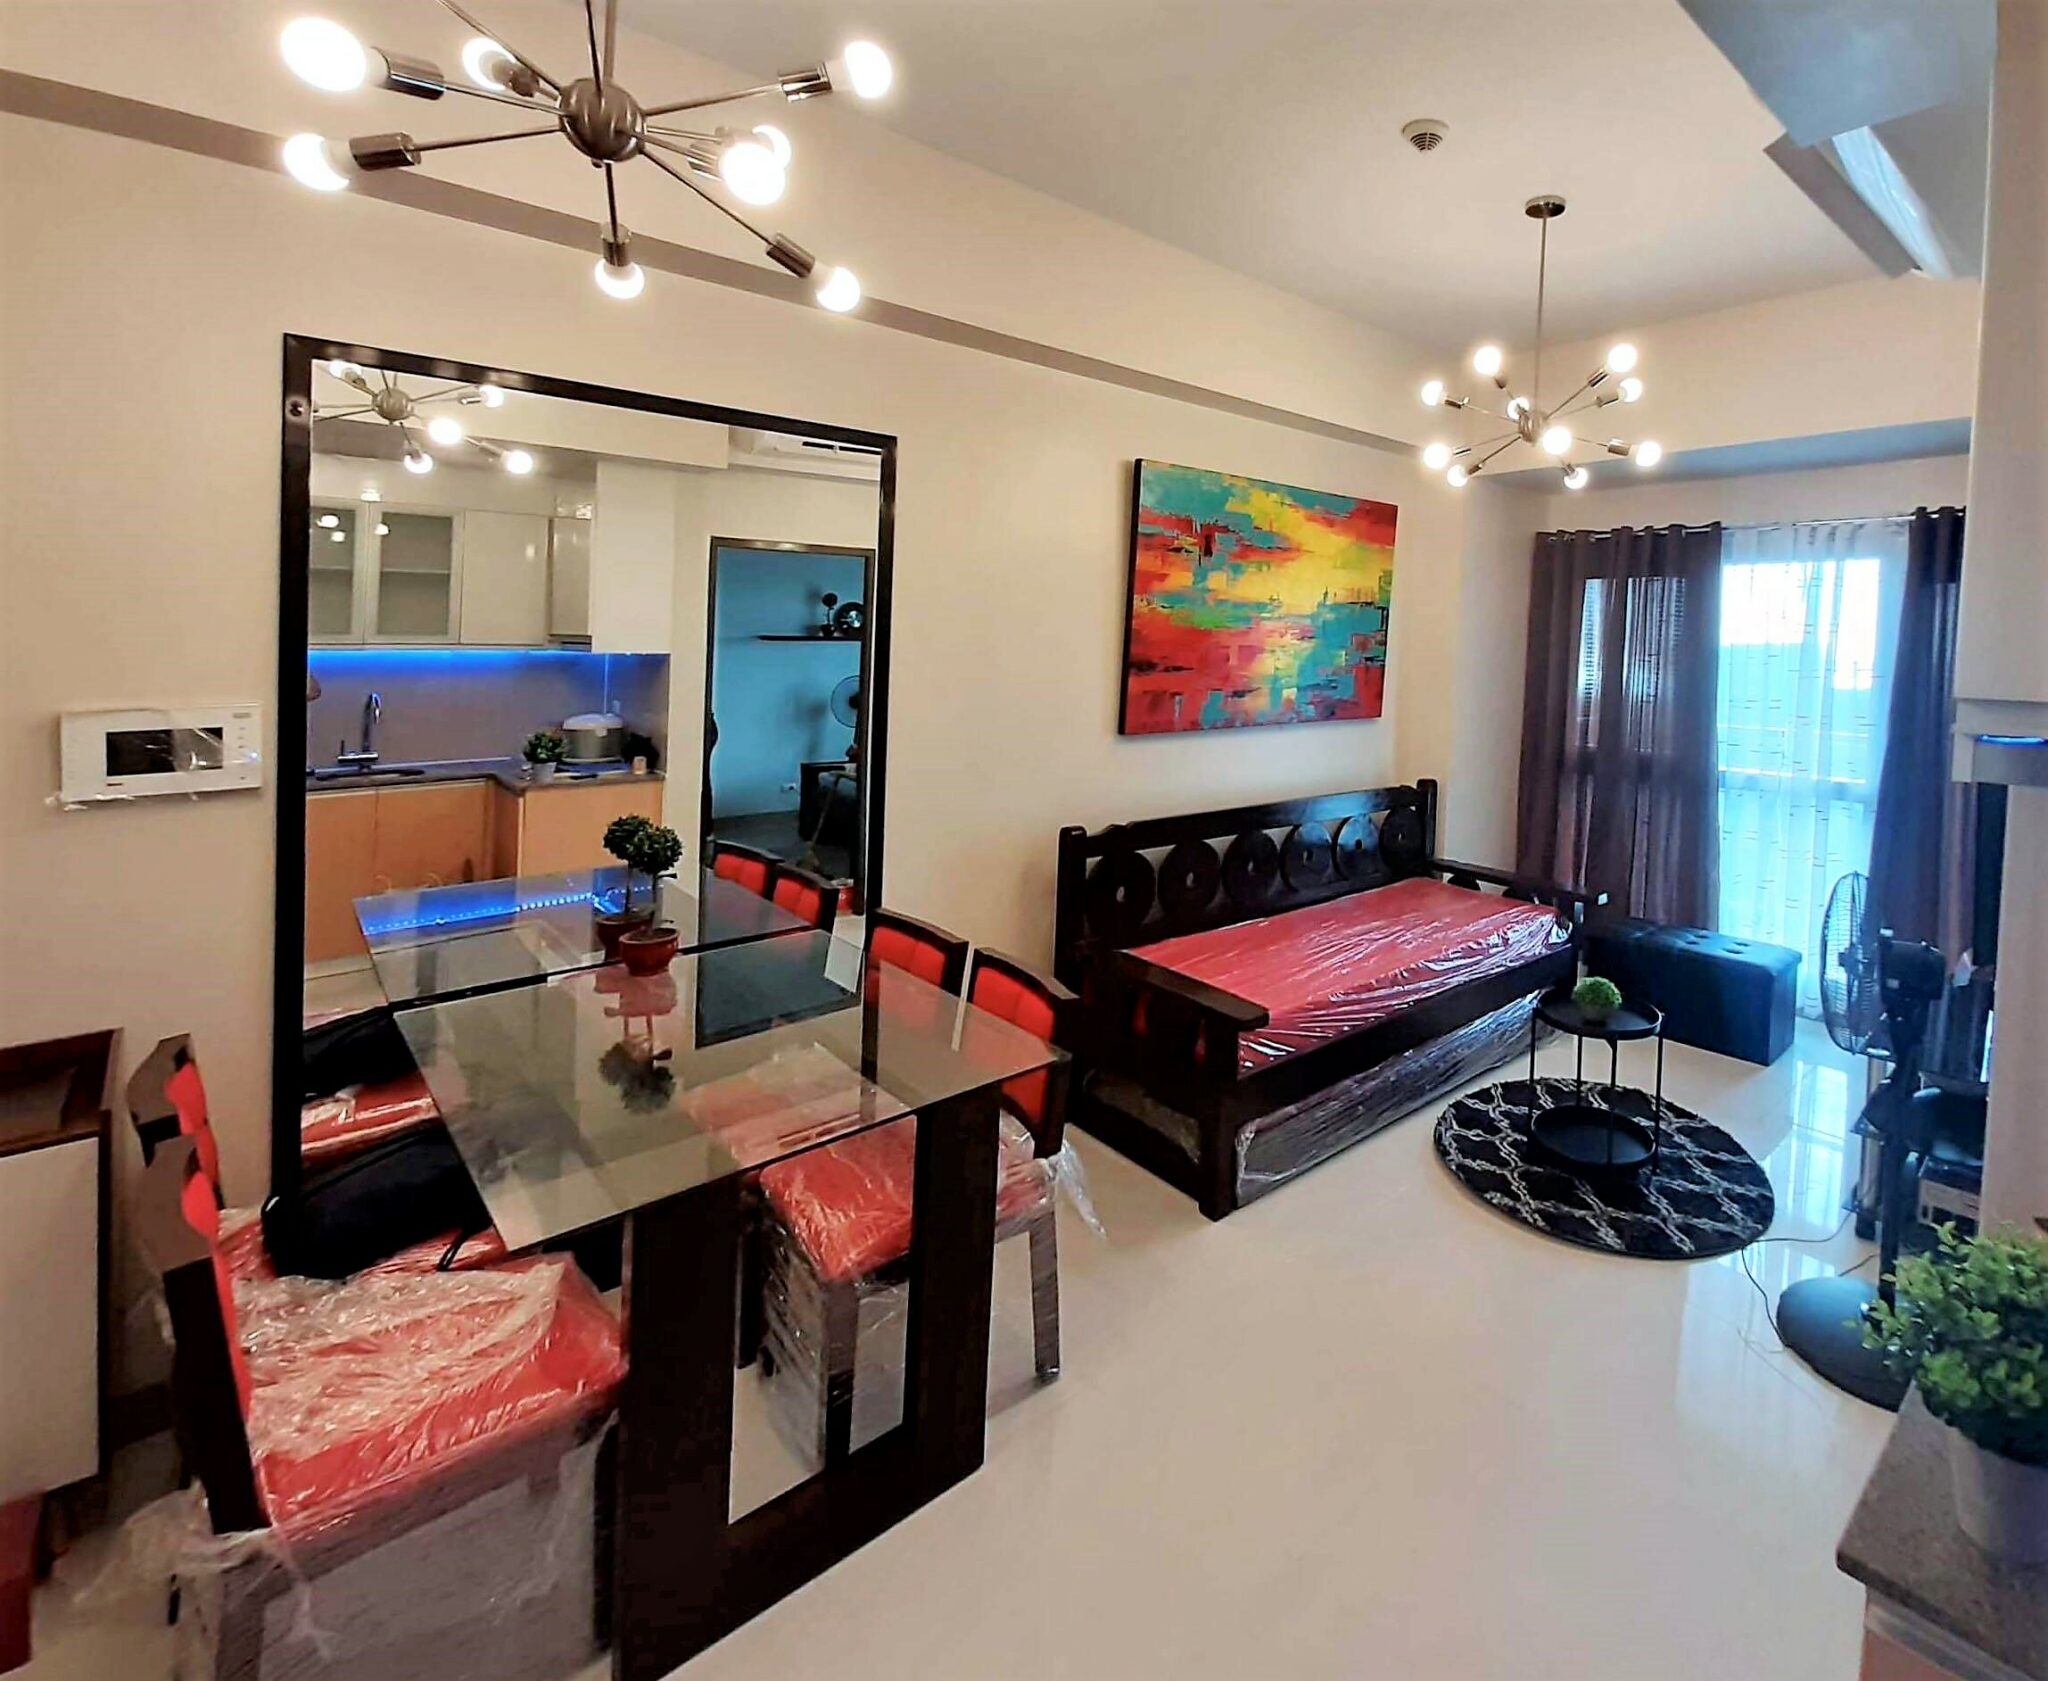 Condo Unit For Rent – 11th Floor at Bayshore Residential Resort